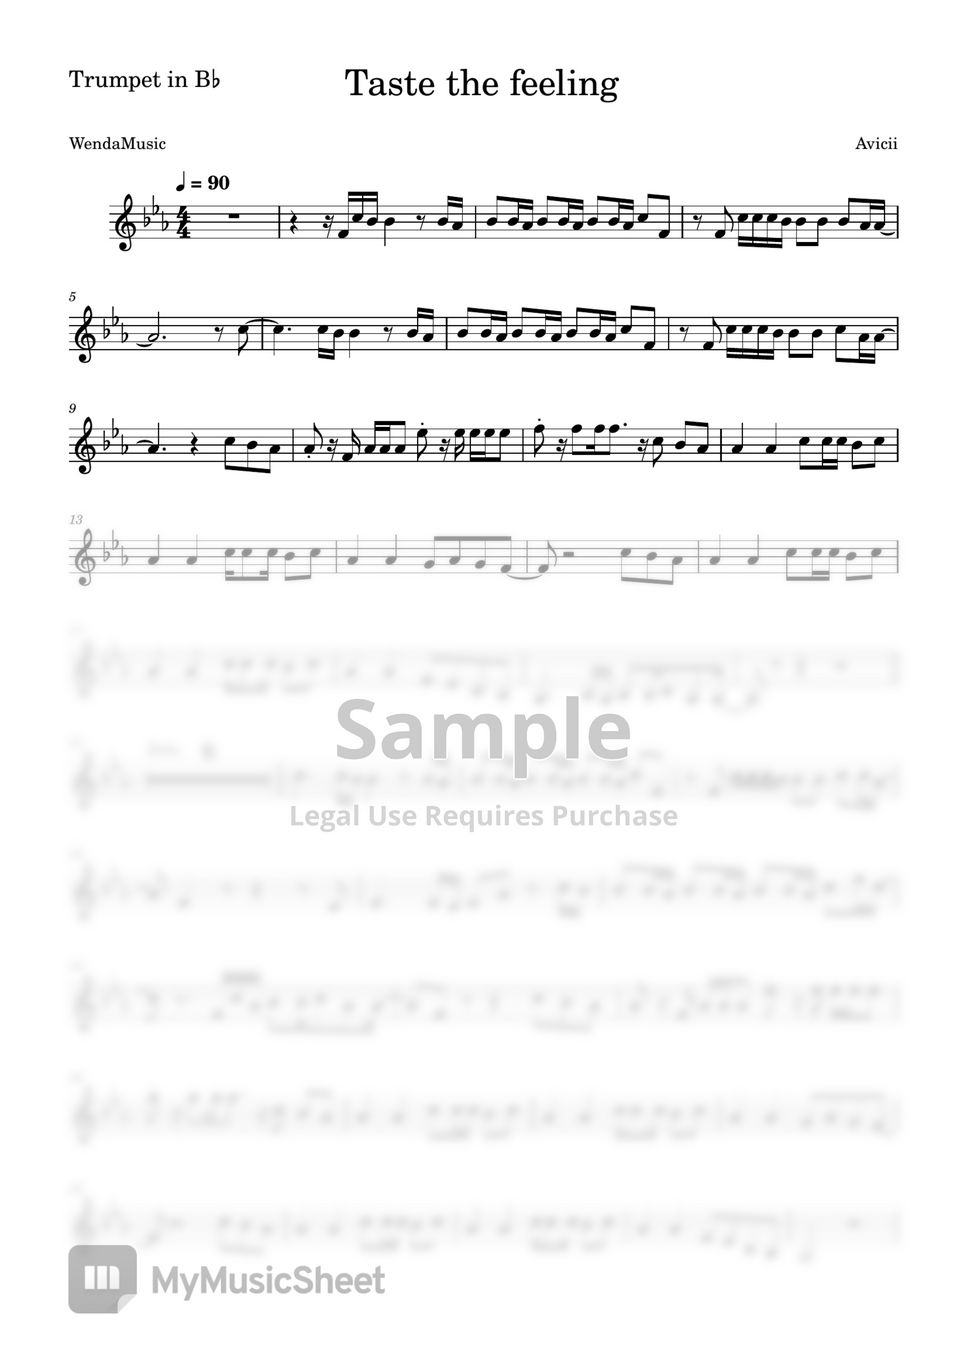 Avicii - Taste the Feeling (Trumpet in Bb) by WendaMusic